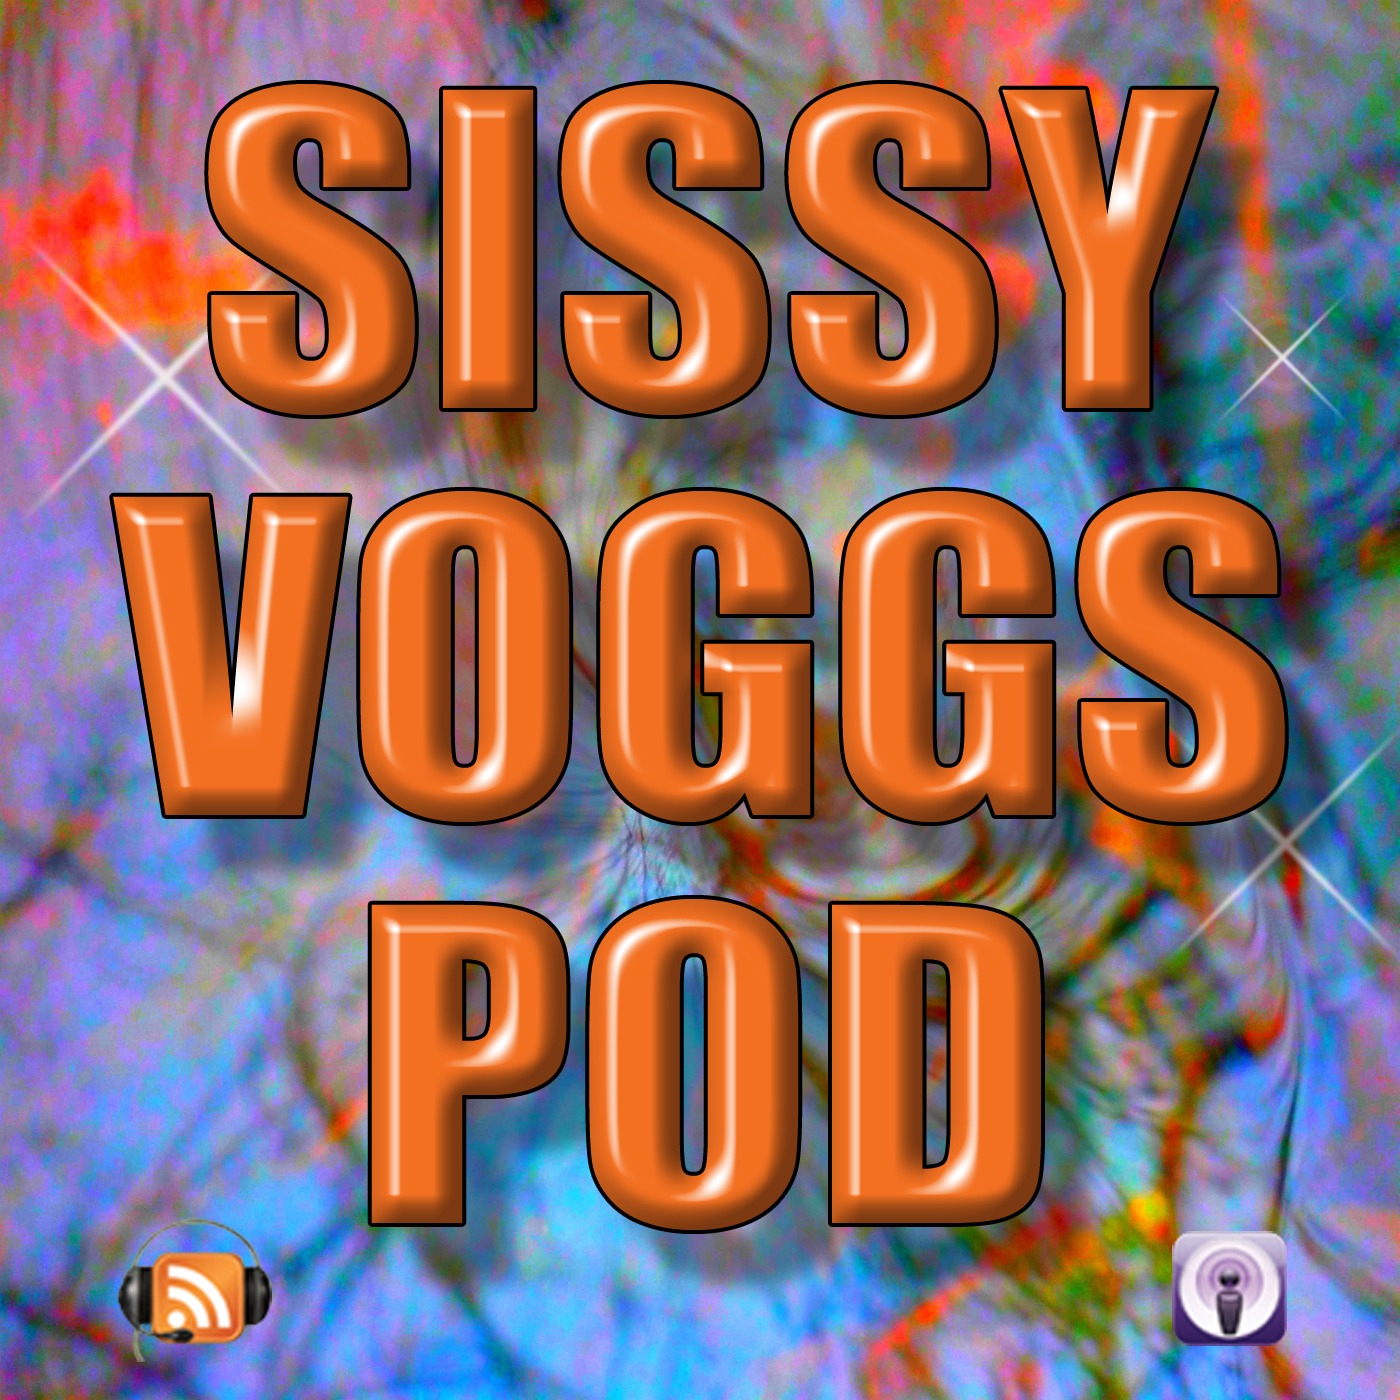 Sissy Voggs Pod